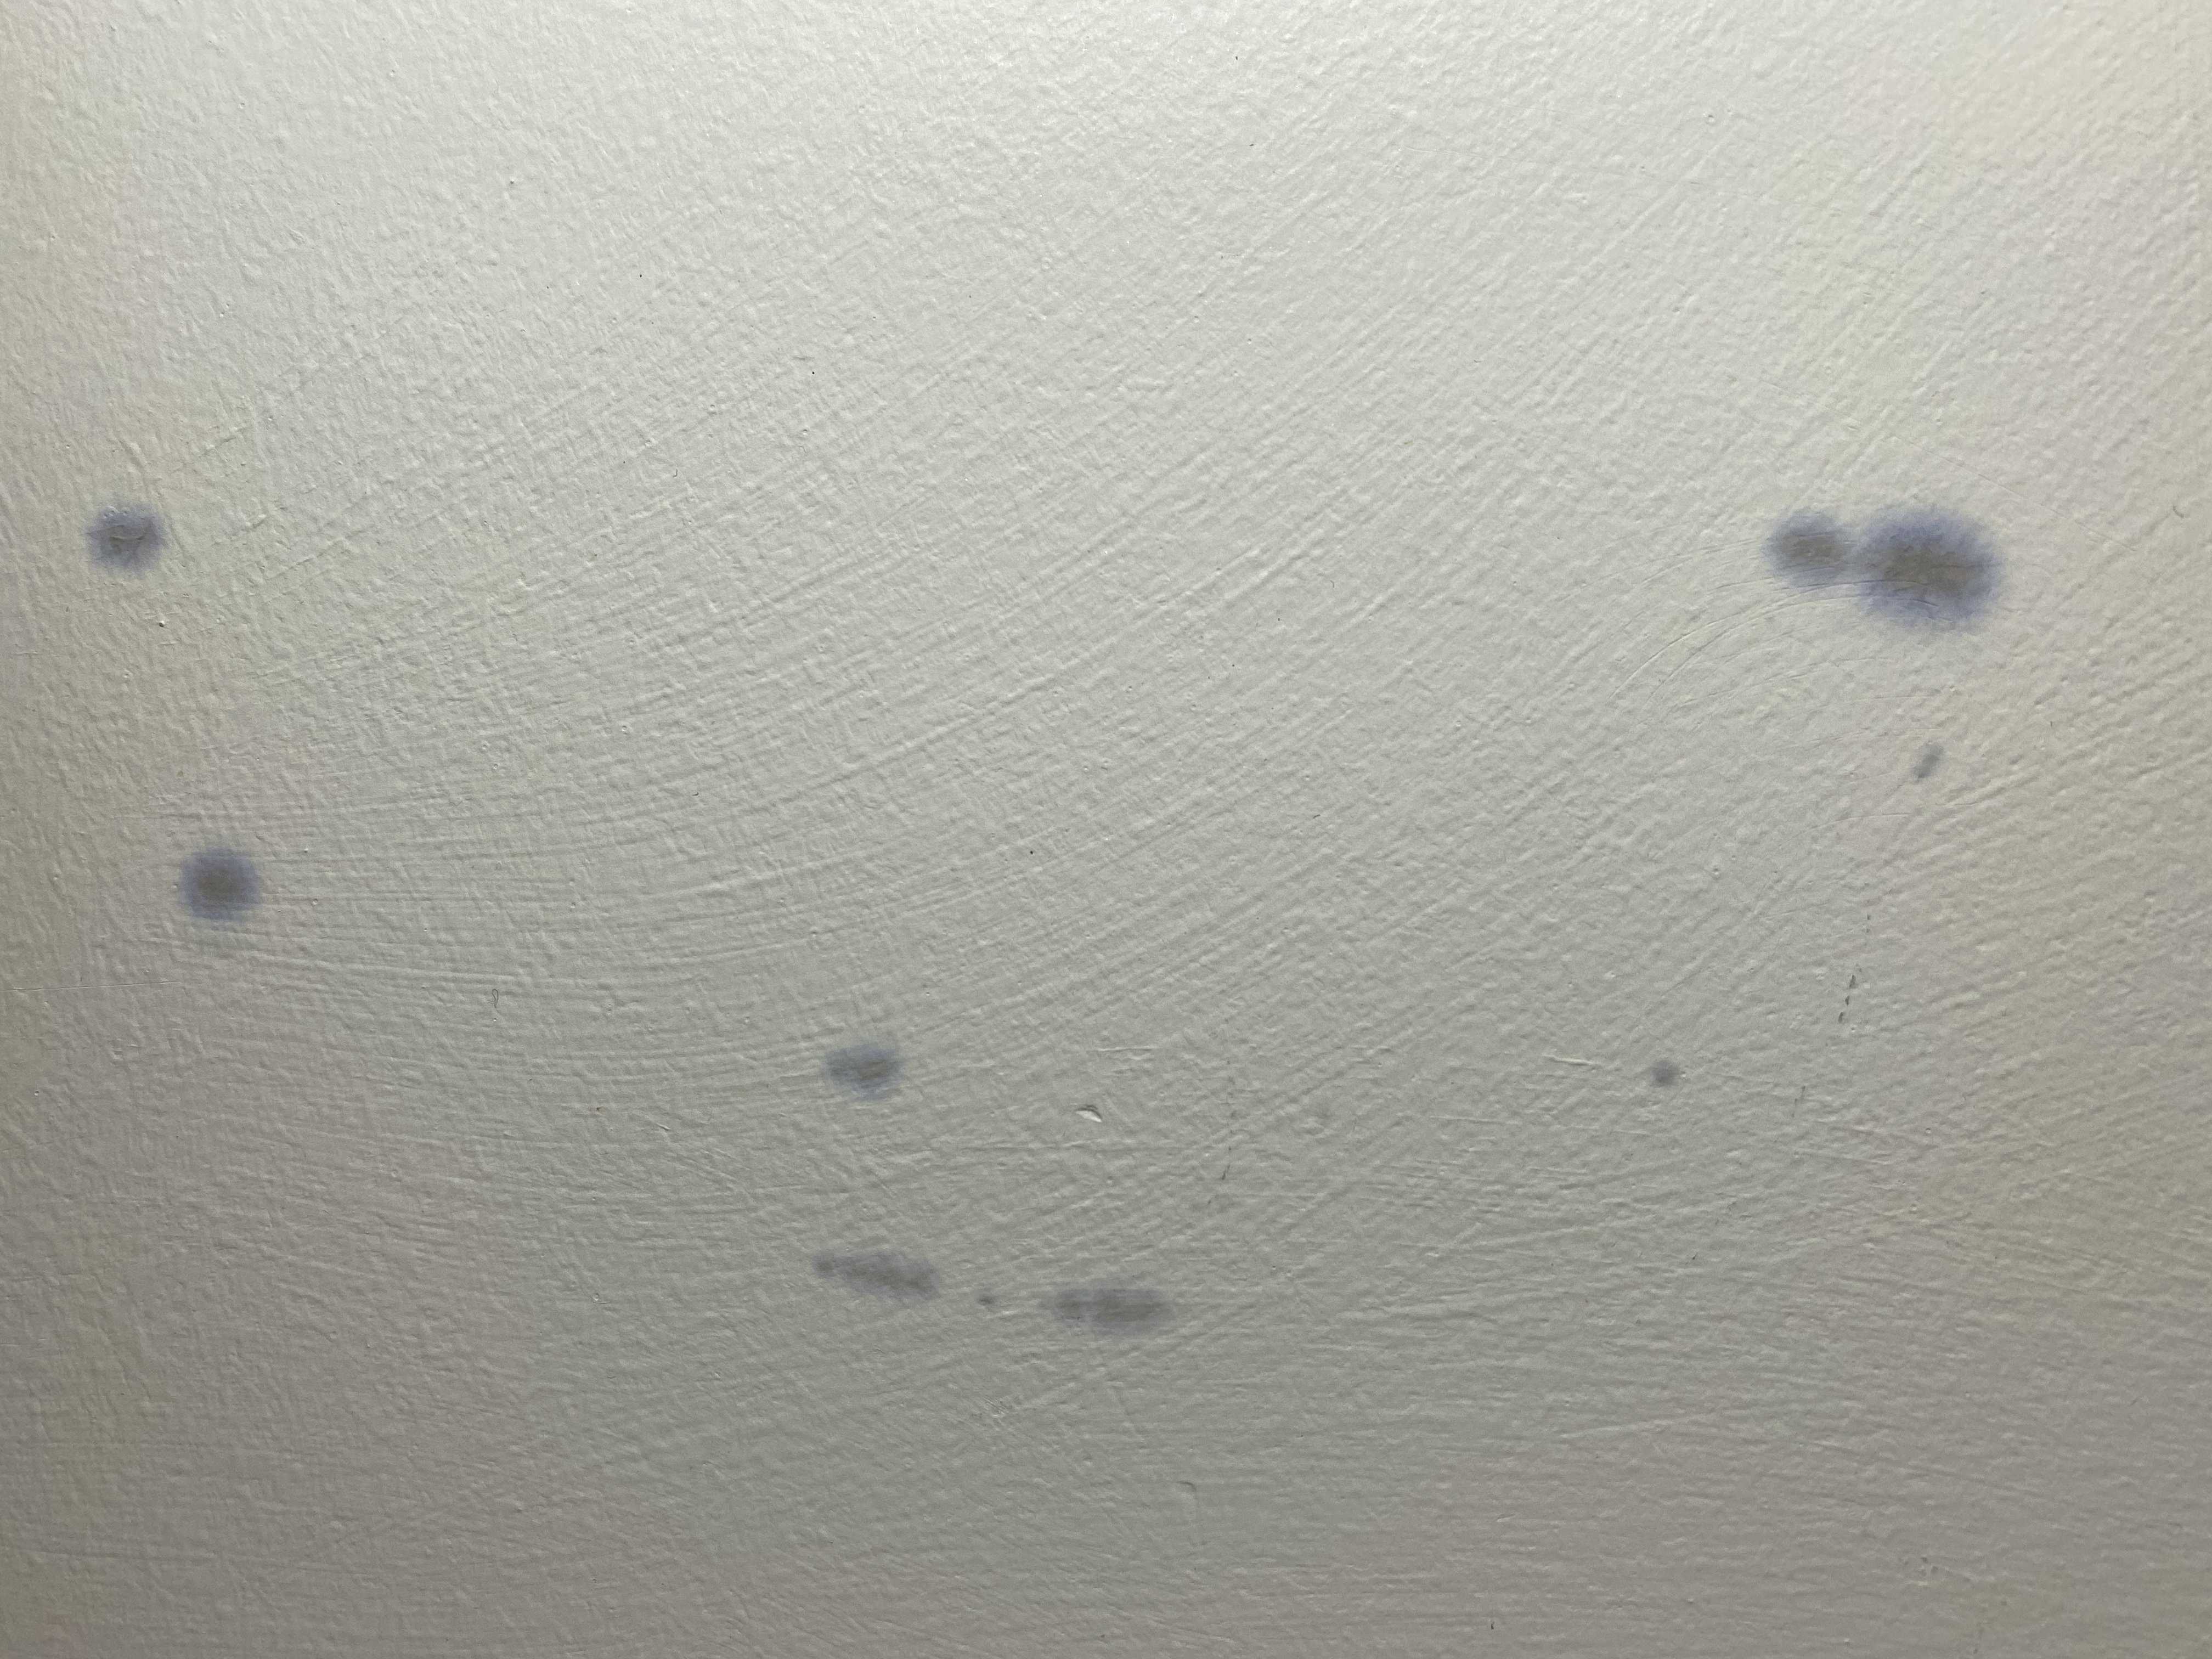 Help! Blue spots coming through white paint?!